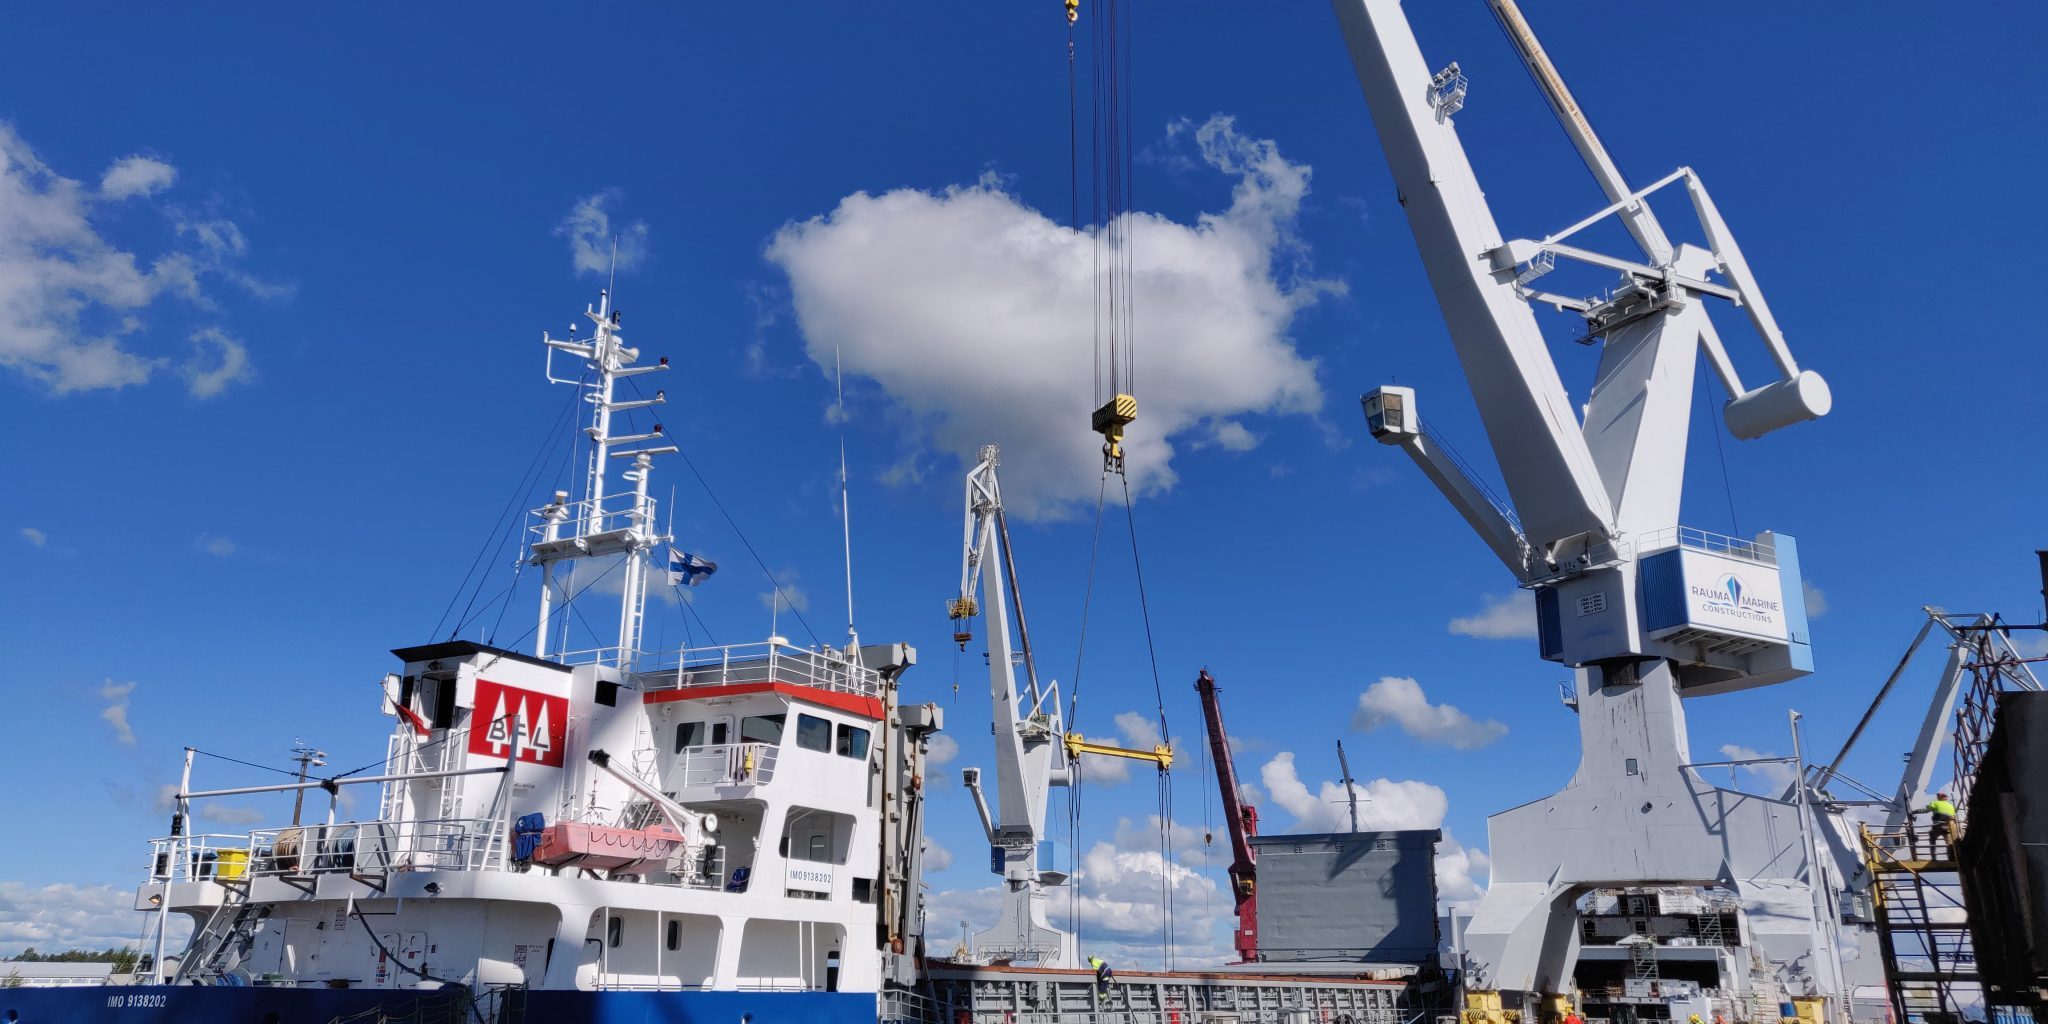 The crane unloads the ship in port.